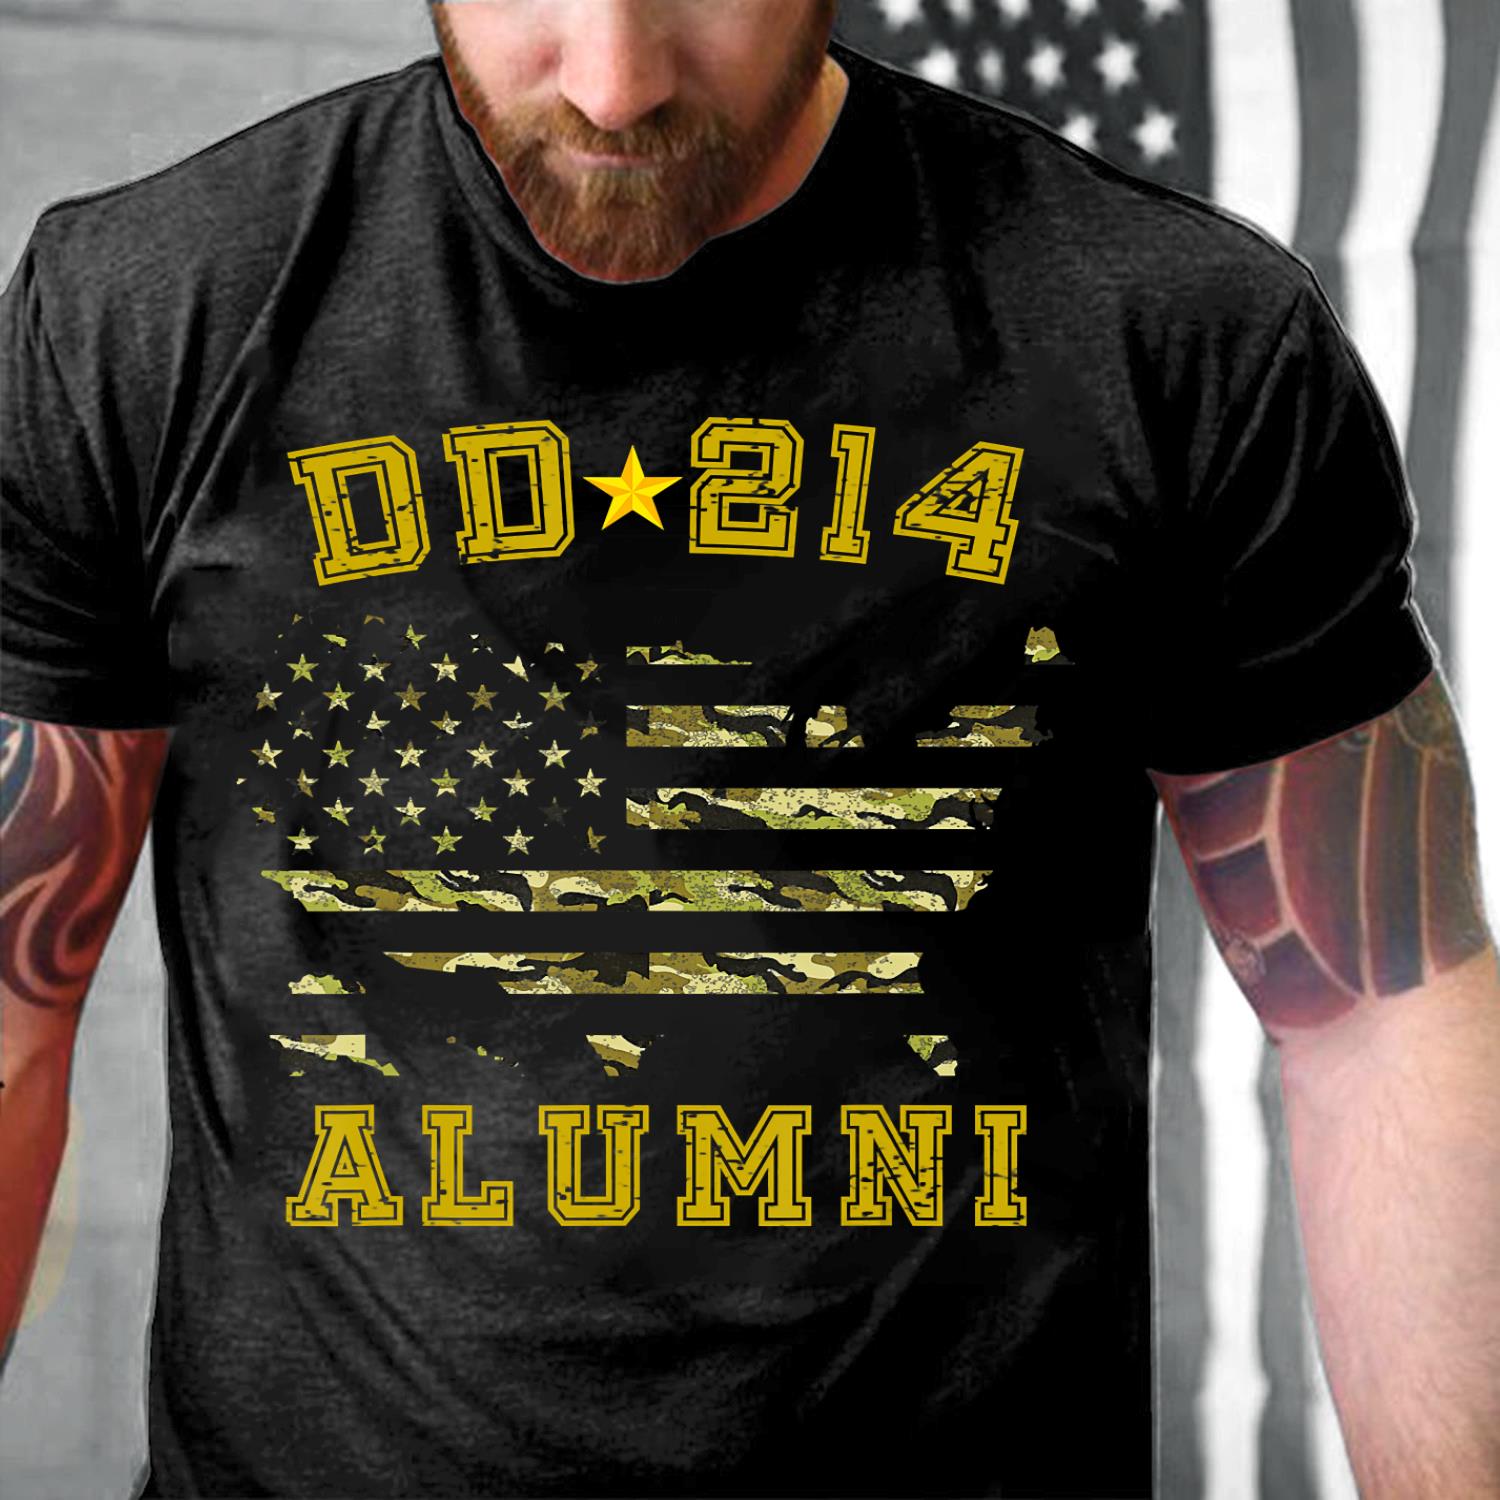 DD-214 Alumni Retirement Military Discharge DD214 Veterans T-Shirt